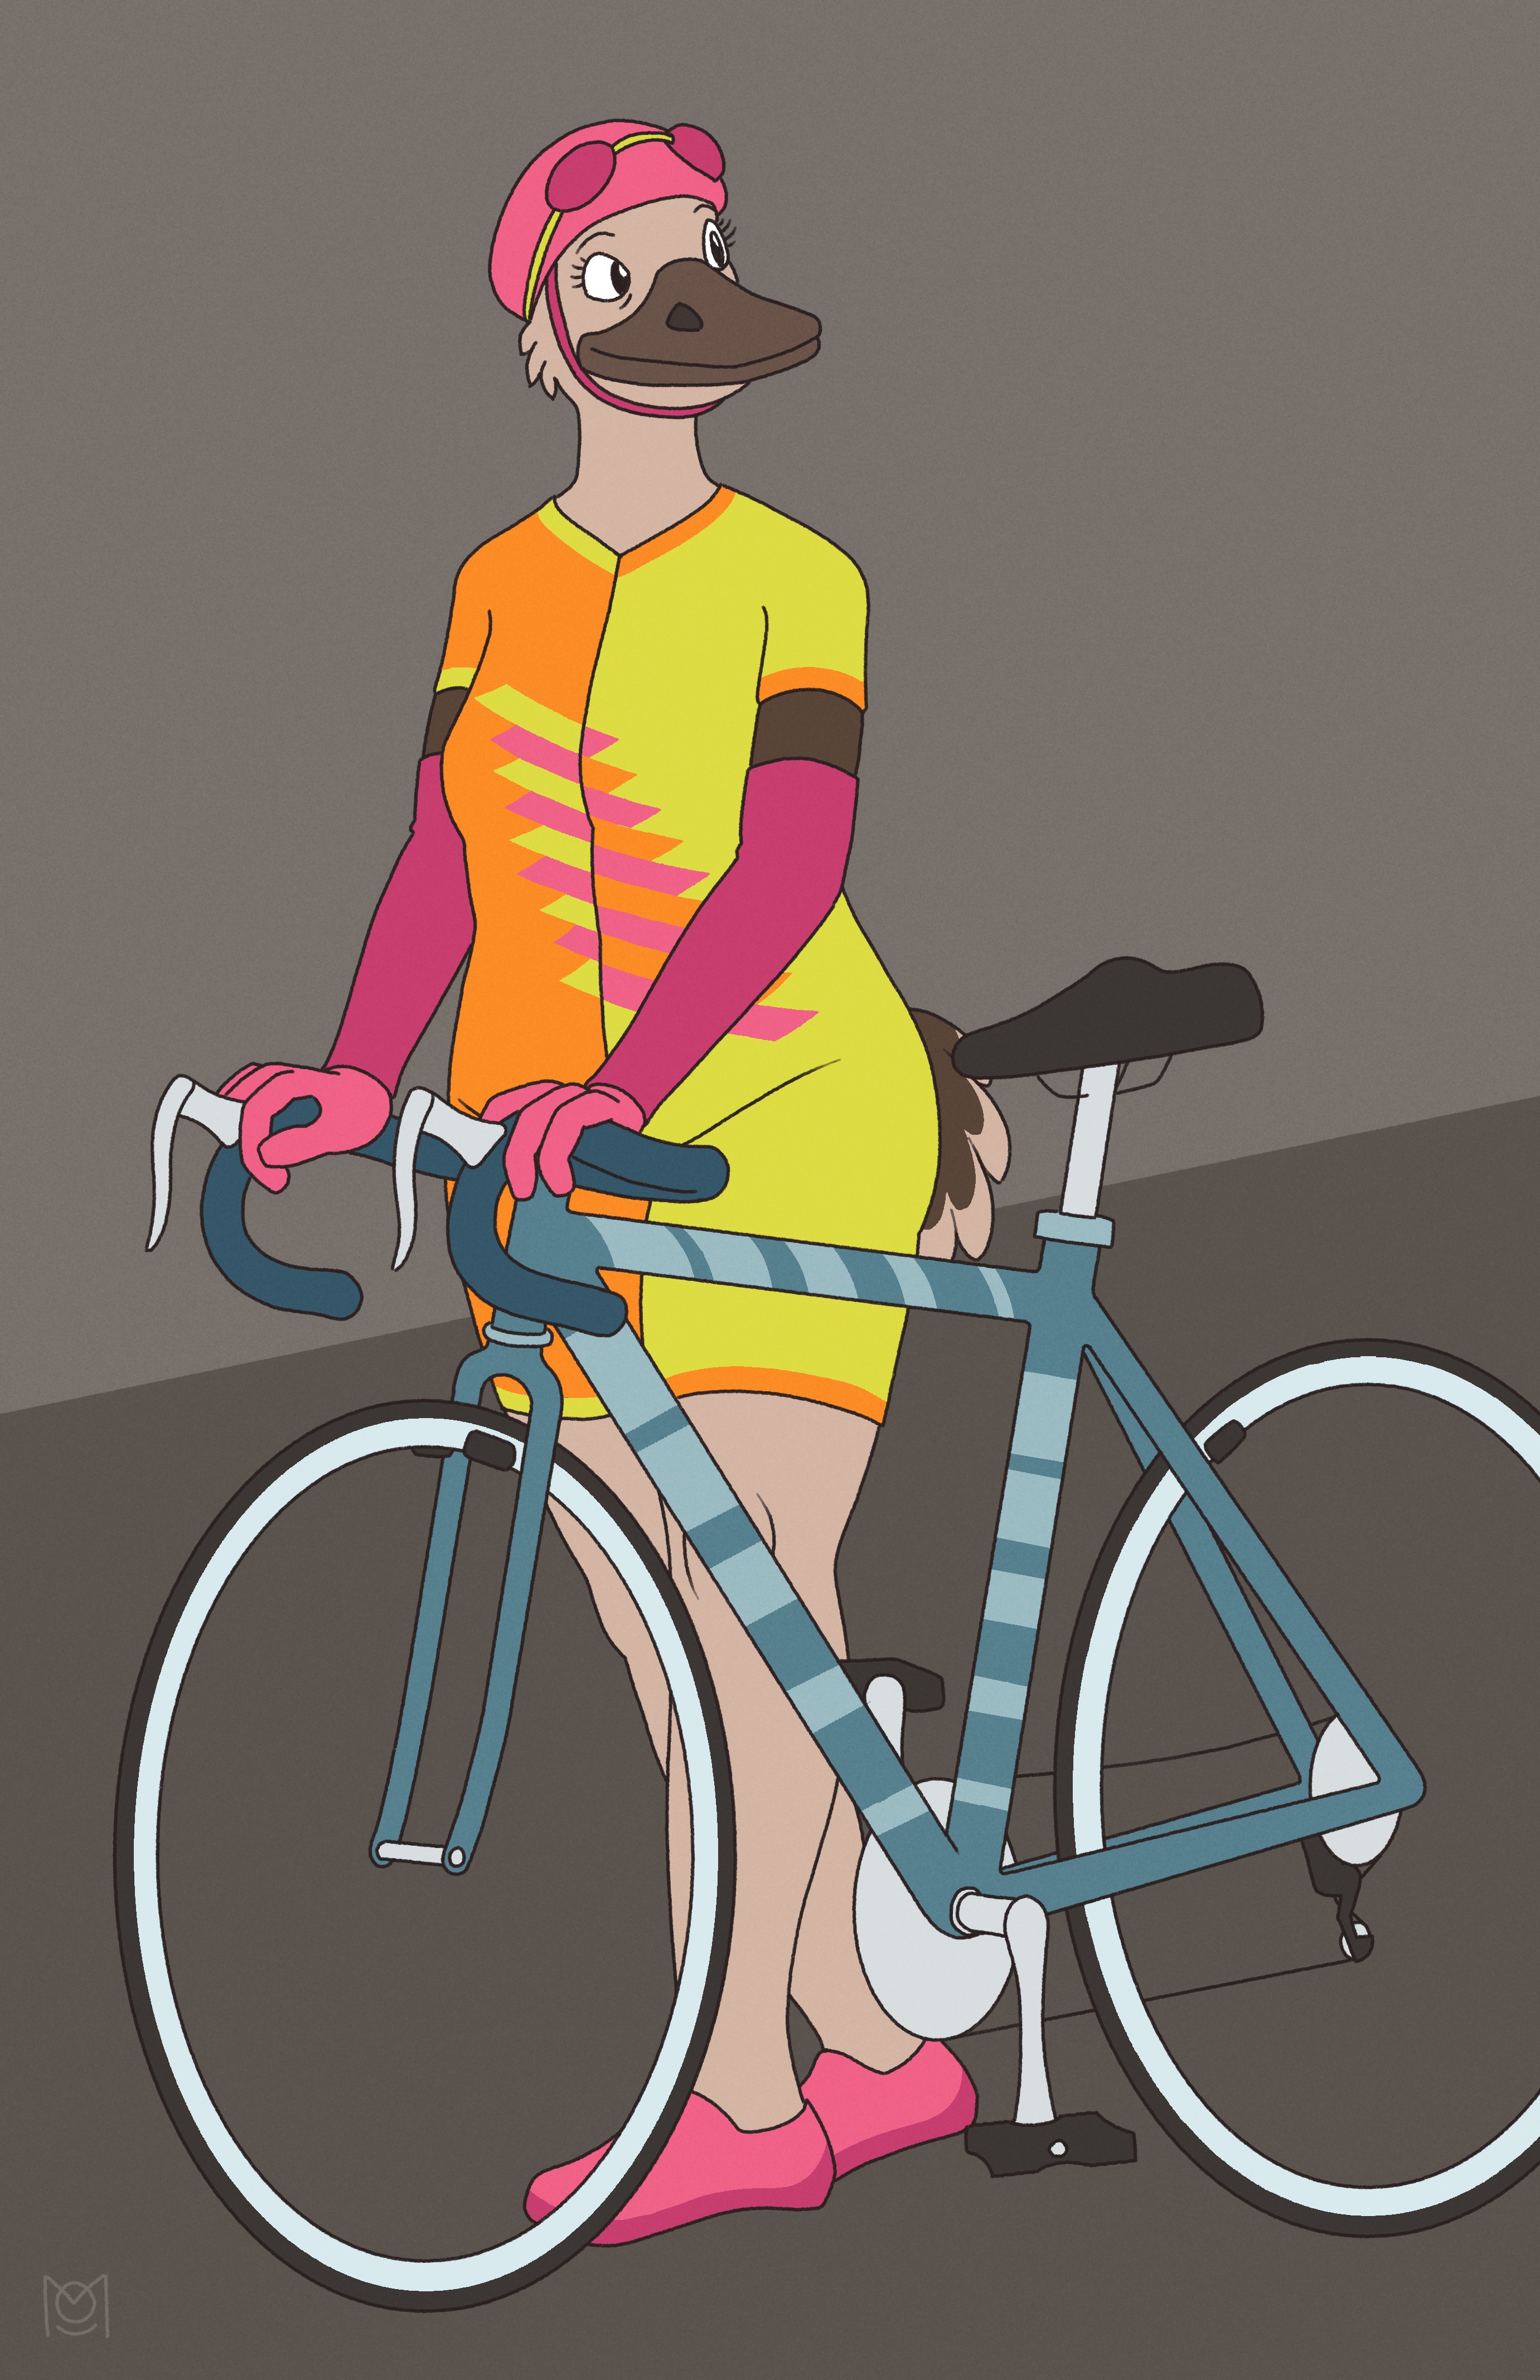 'ffion cycliste' piece